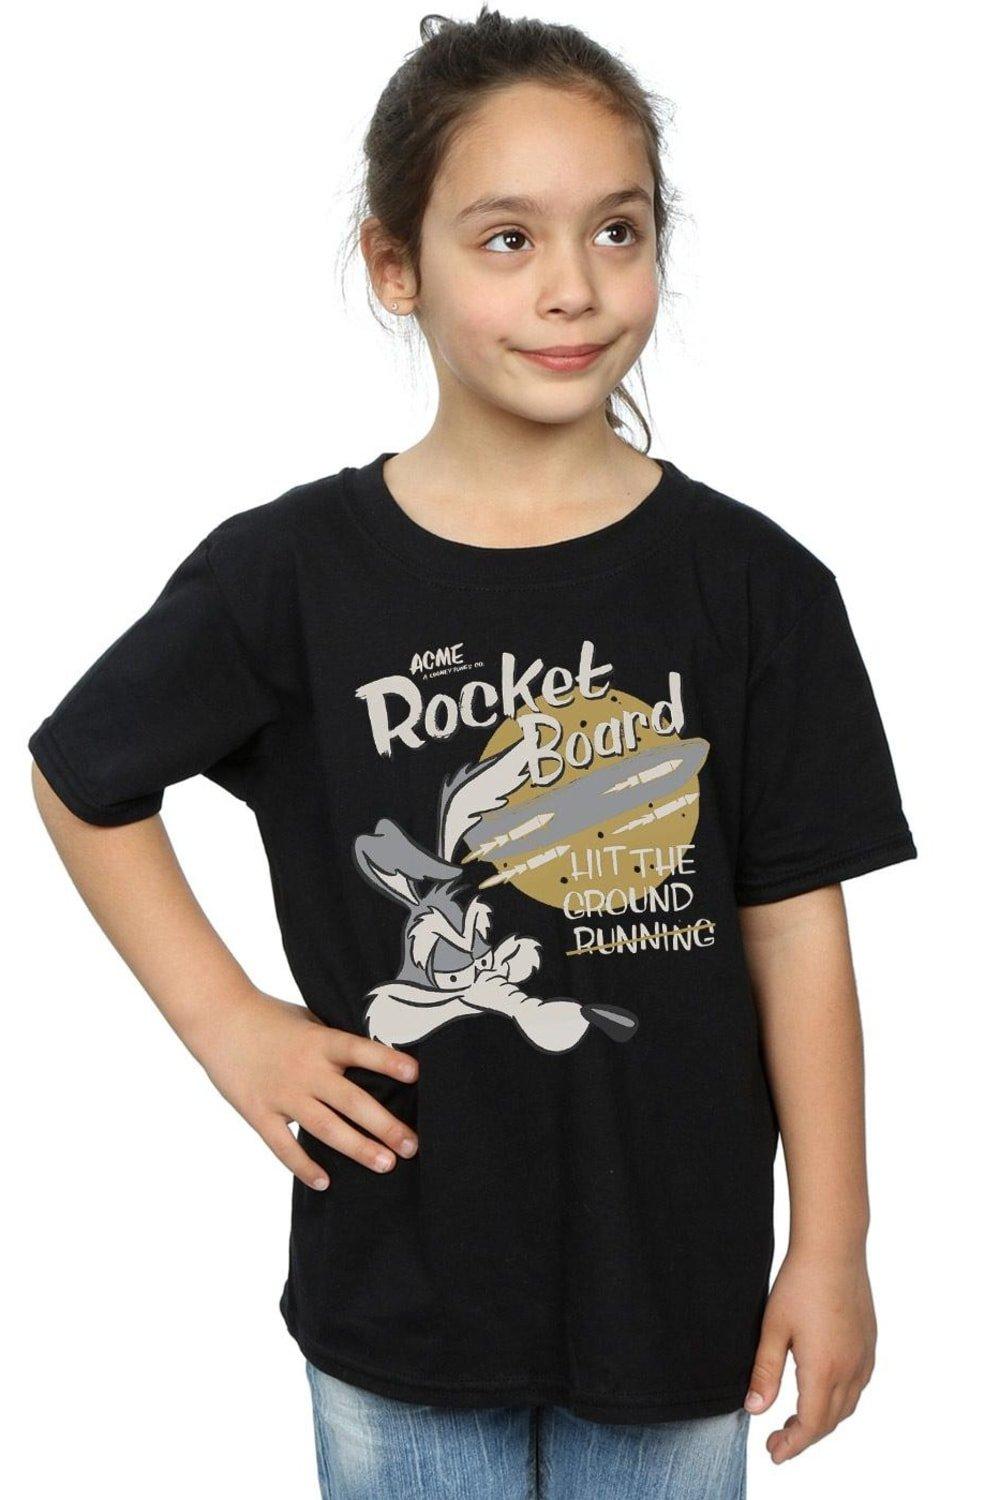 Wile E Coyote Rocket Board Cotton T-Shirt